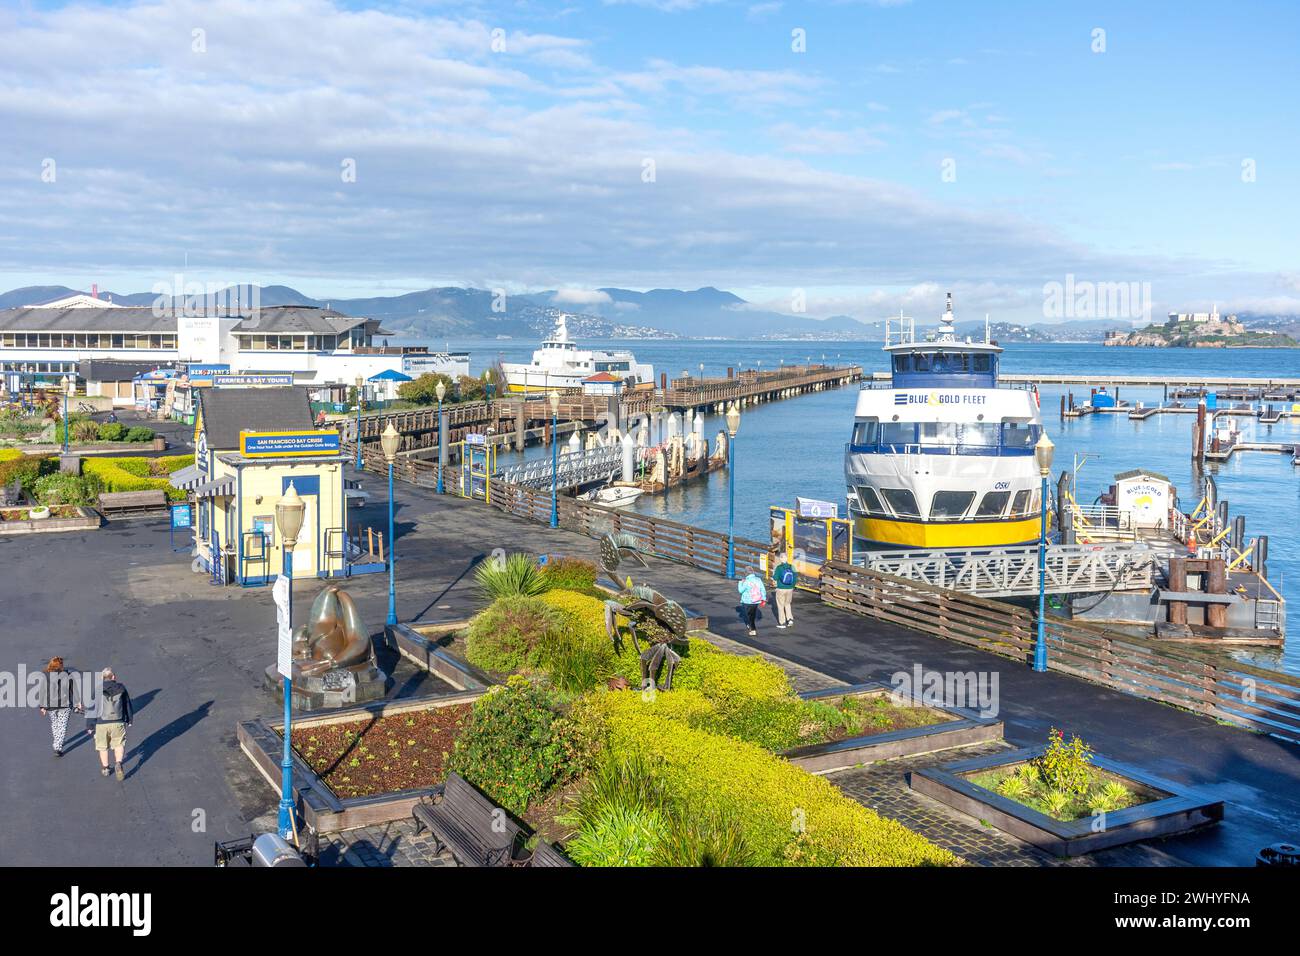 West Park, Pier 39, Fisherman's Wharf District, San Francisco, California, United States Stock Photo